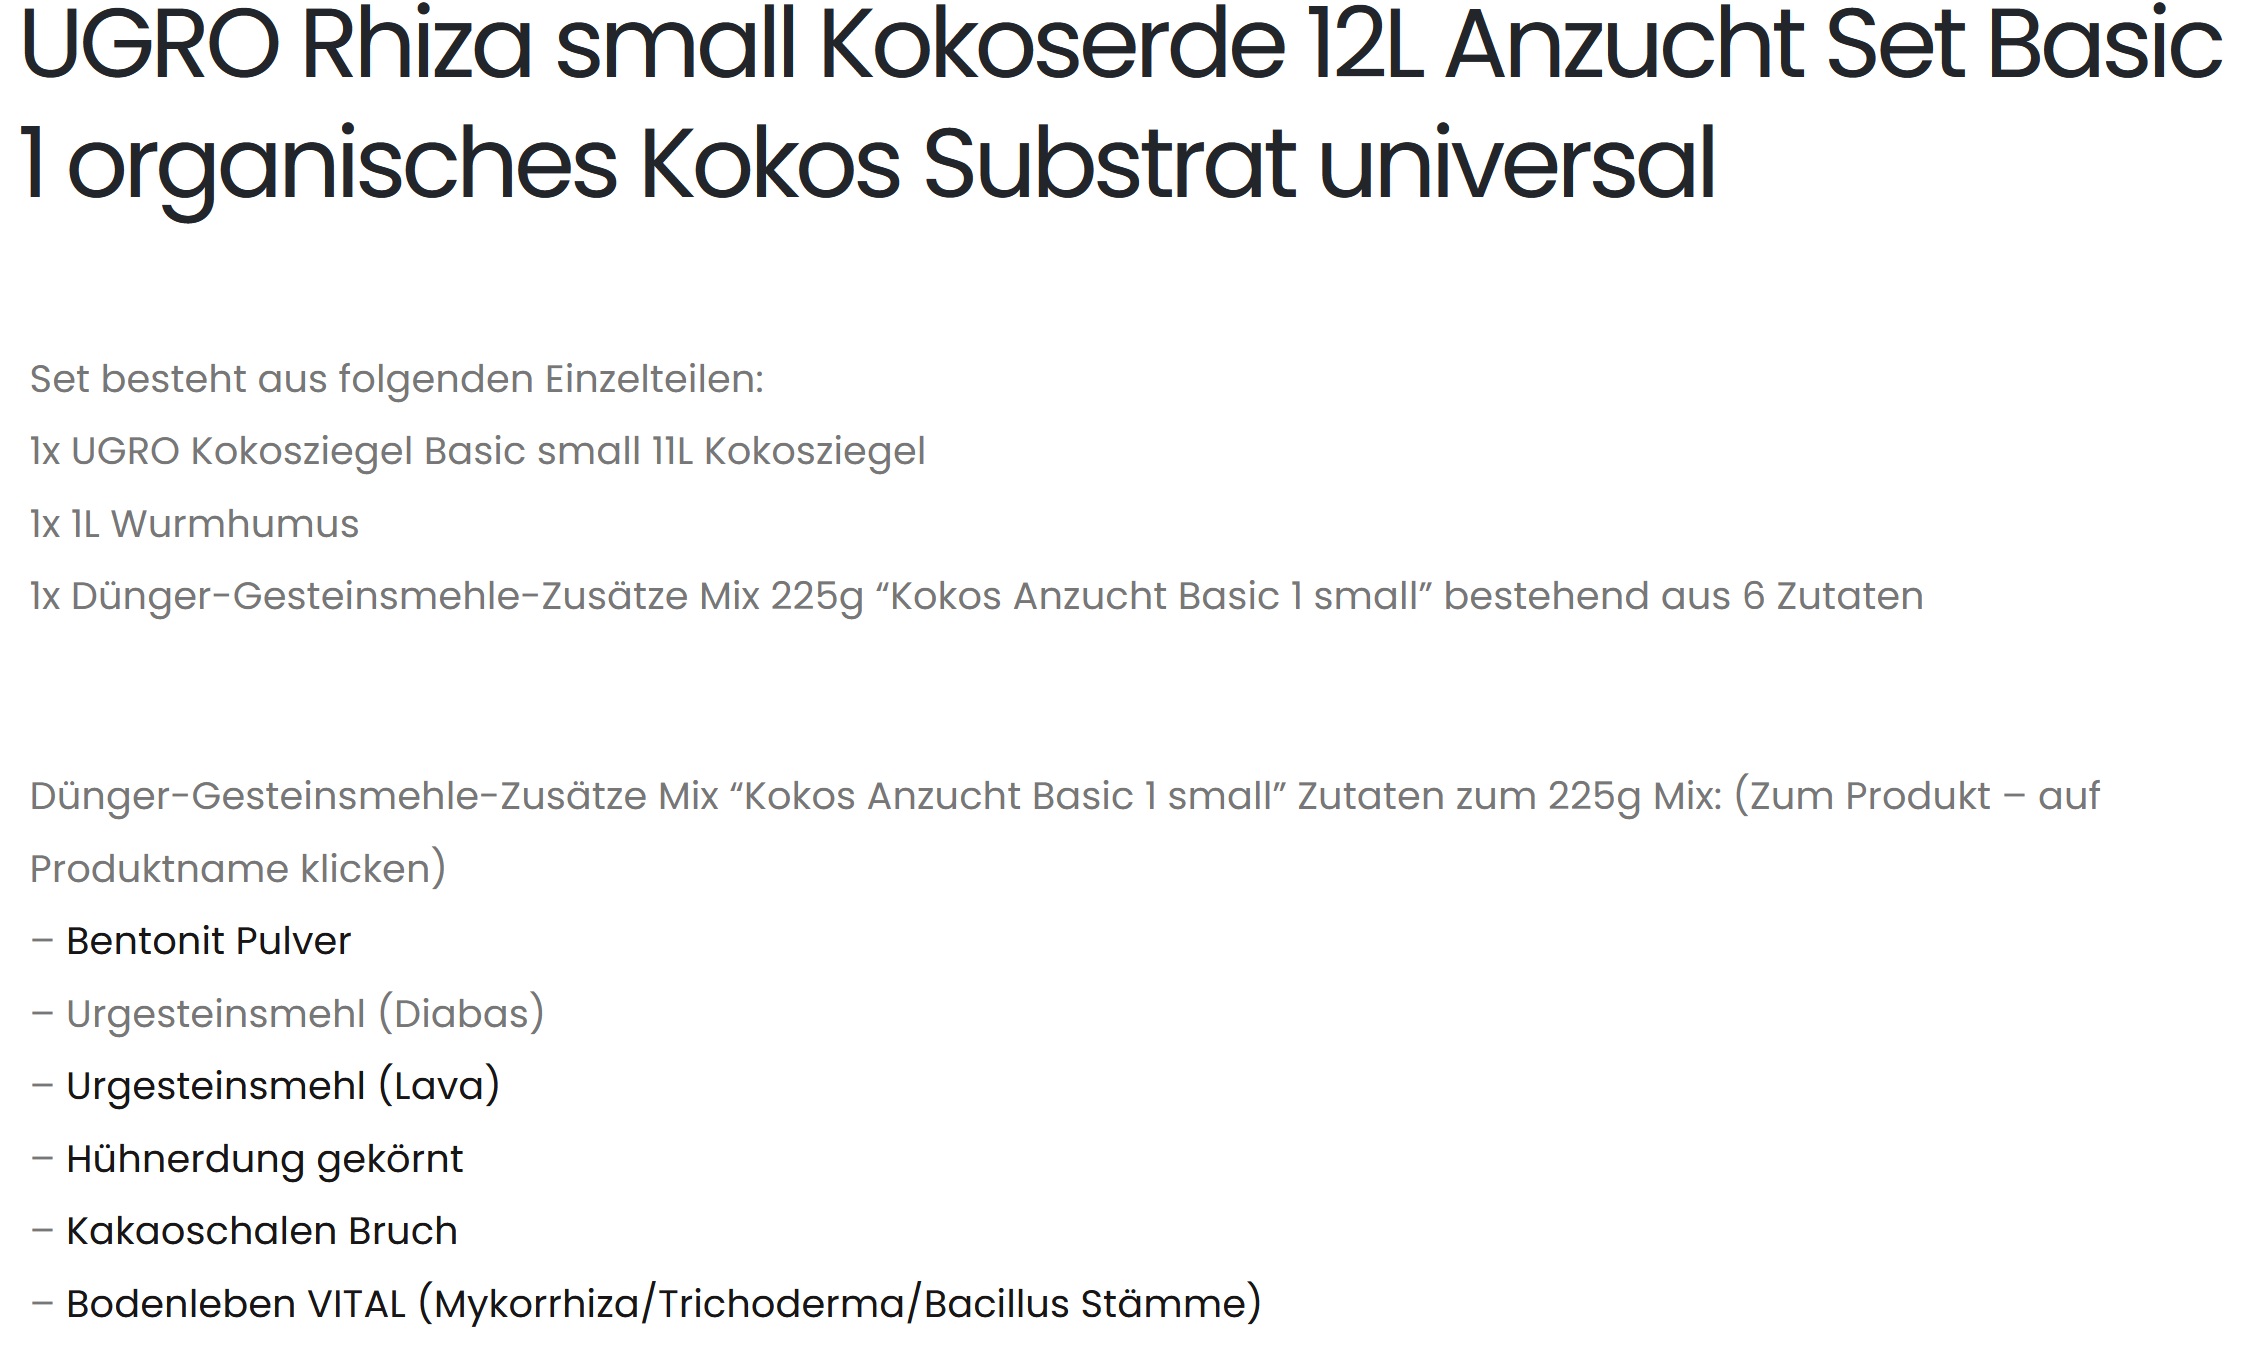 UGRO Rhiza Small Kokoserde 12L Anzucht Set Basic 1 organisches Kokos Substrat universal Produktbild